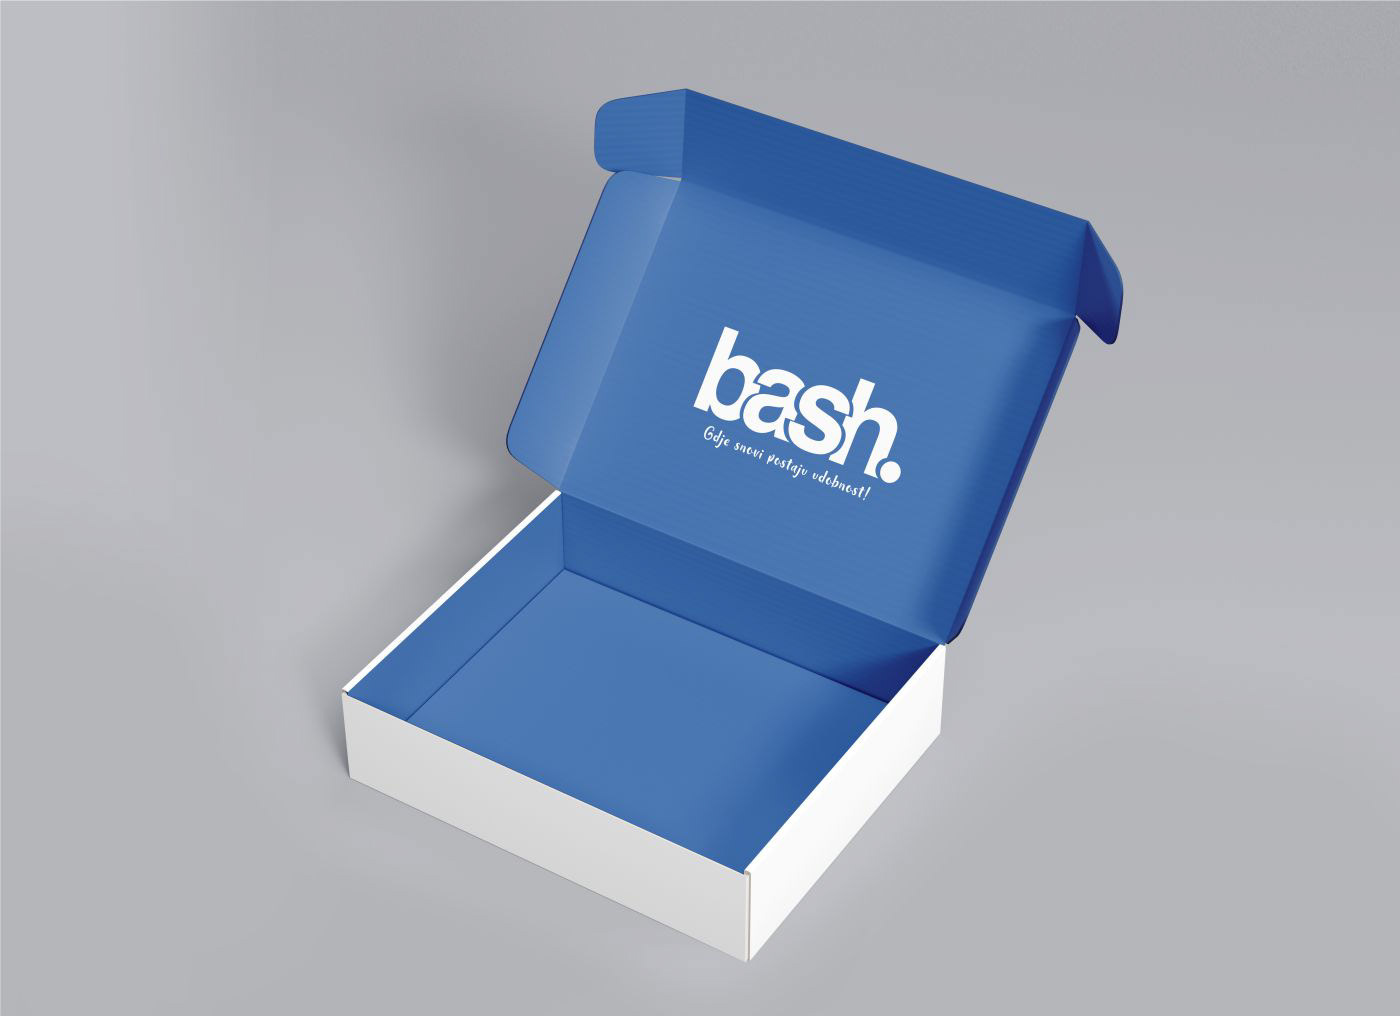 Bash logo design